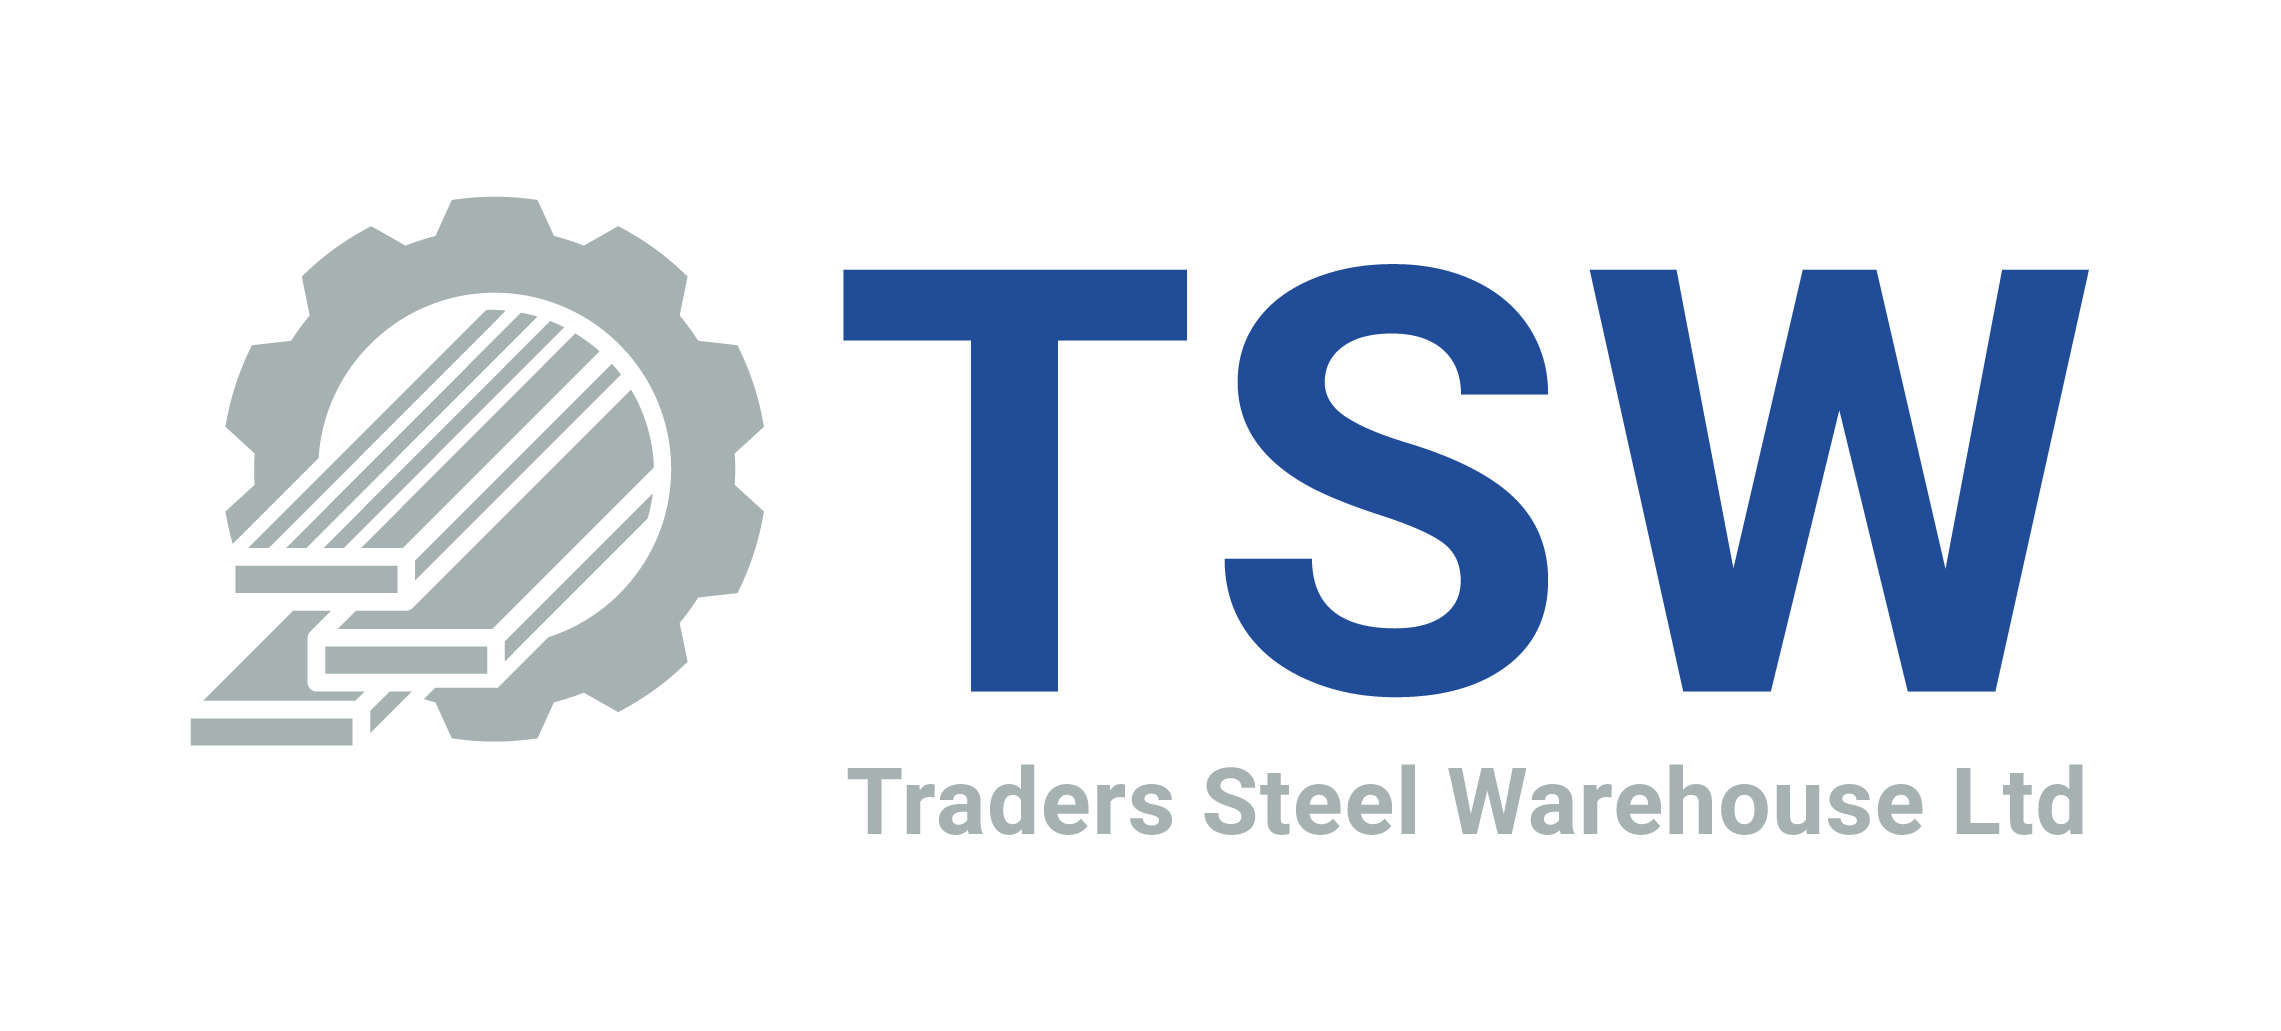 Traders Steel Warehouse Ltd.